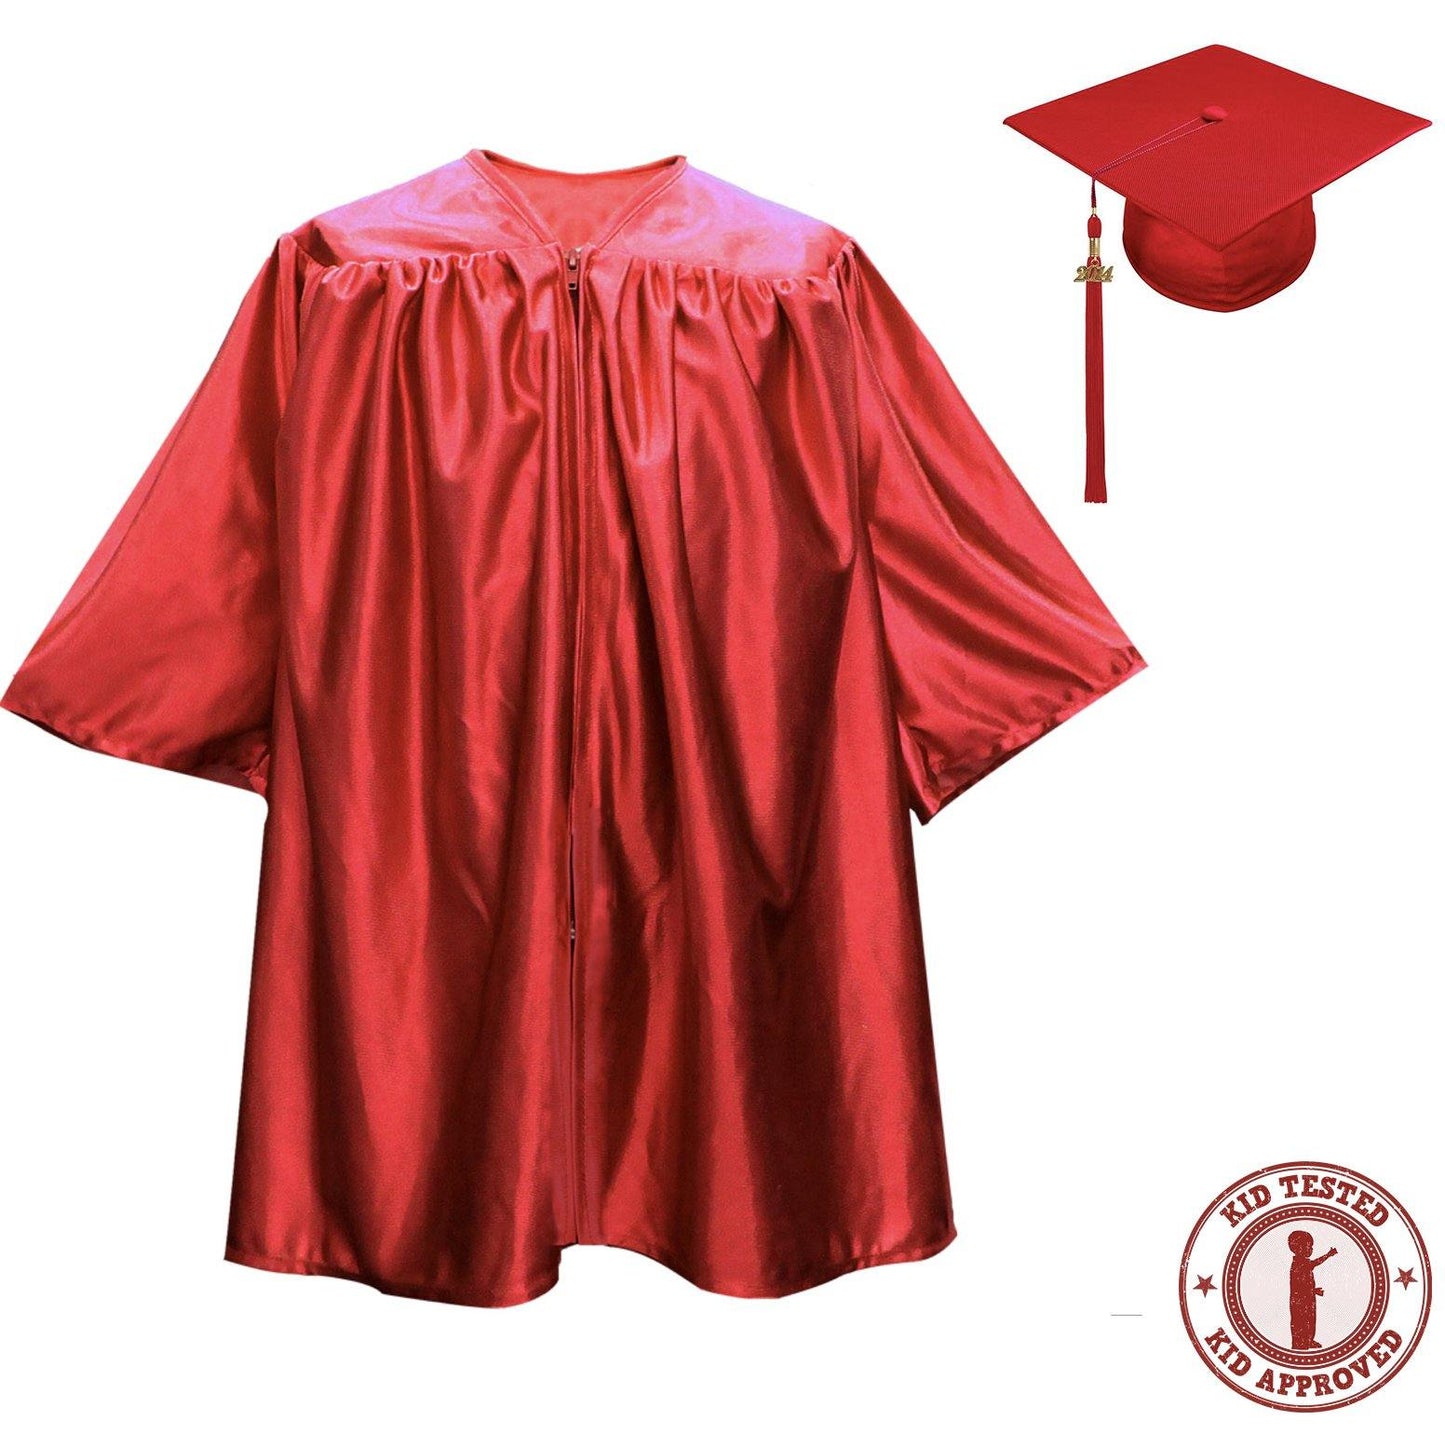 Kinder Cap & Gown Set - Homeschool Diploma